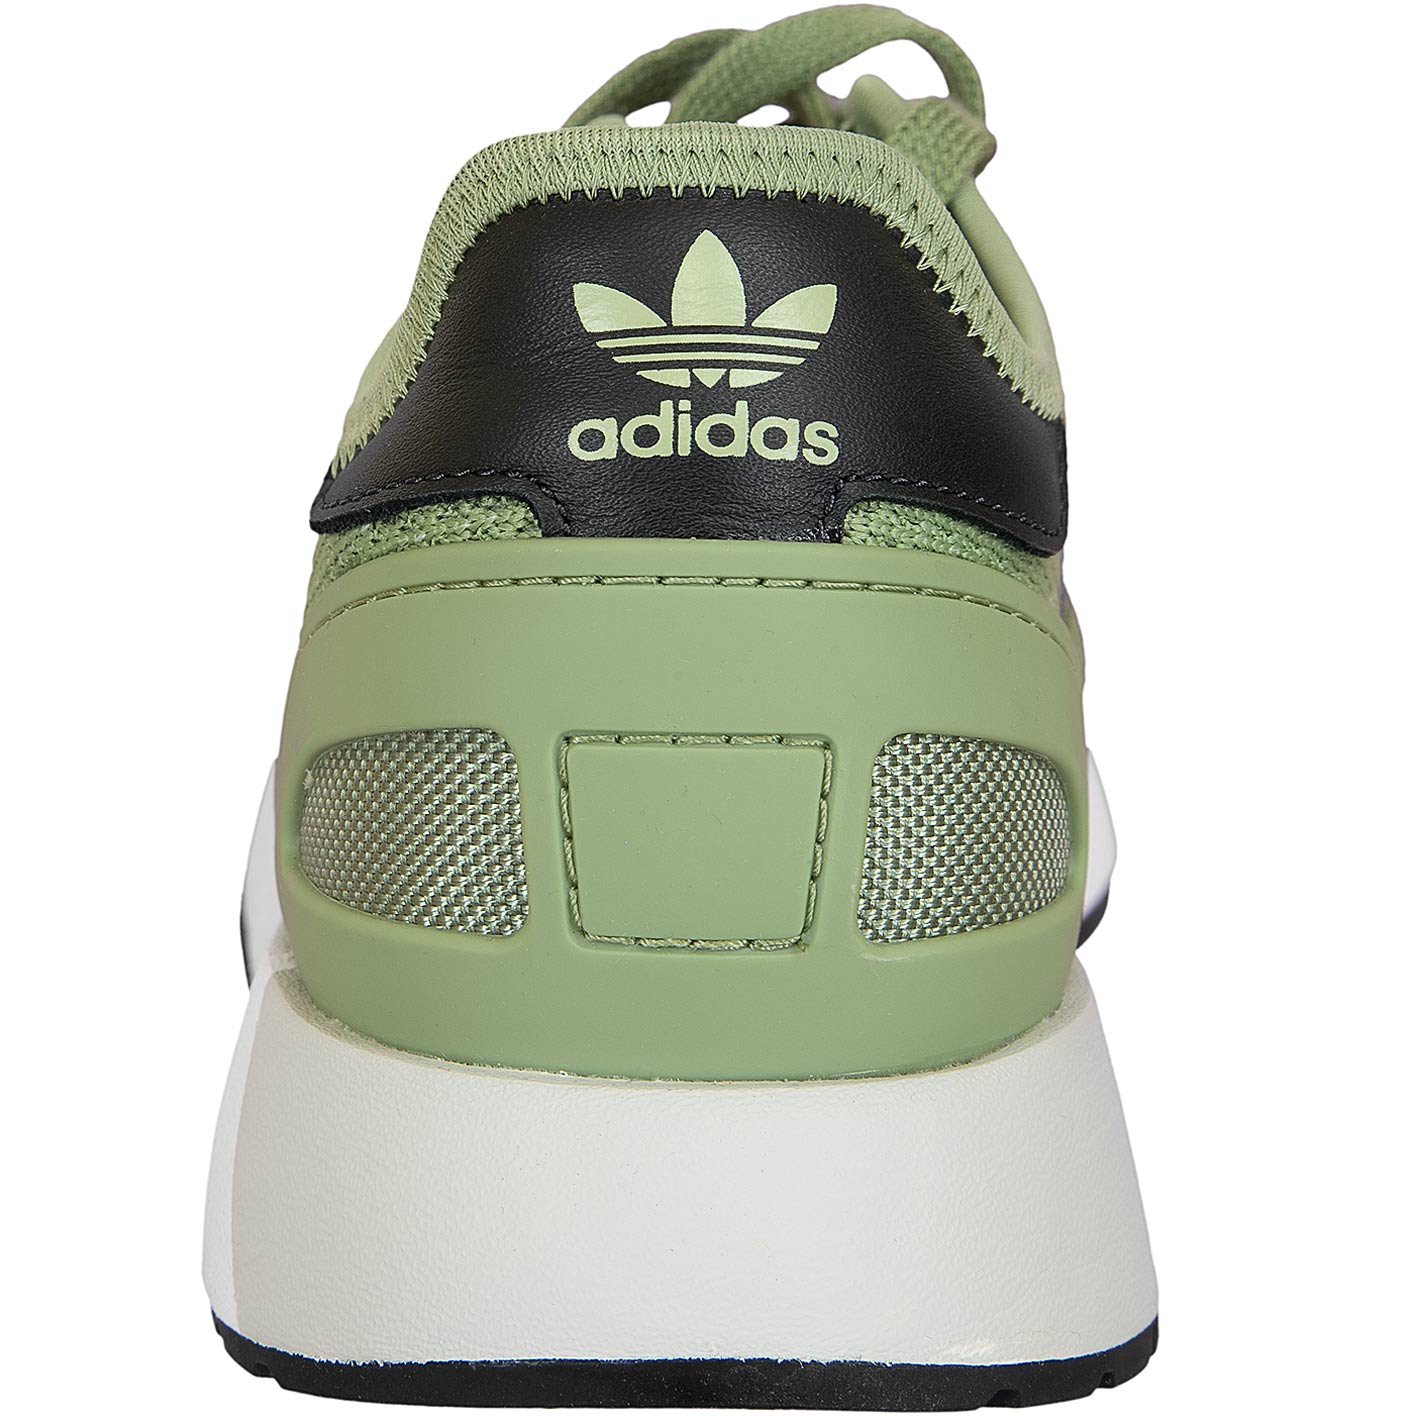 ☆ Adidas Originals Sneaker N-5923 grün - hier bestellen!